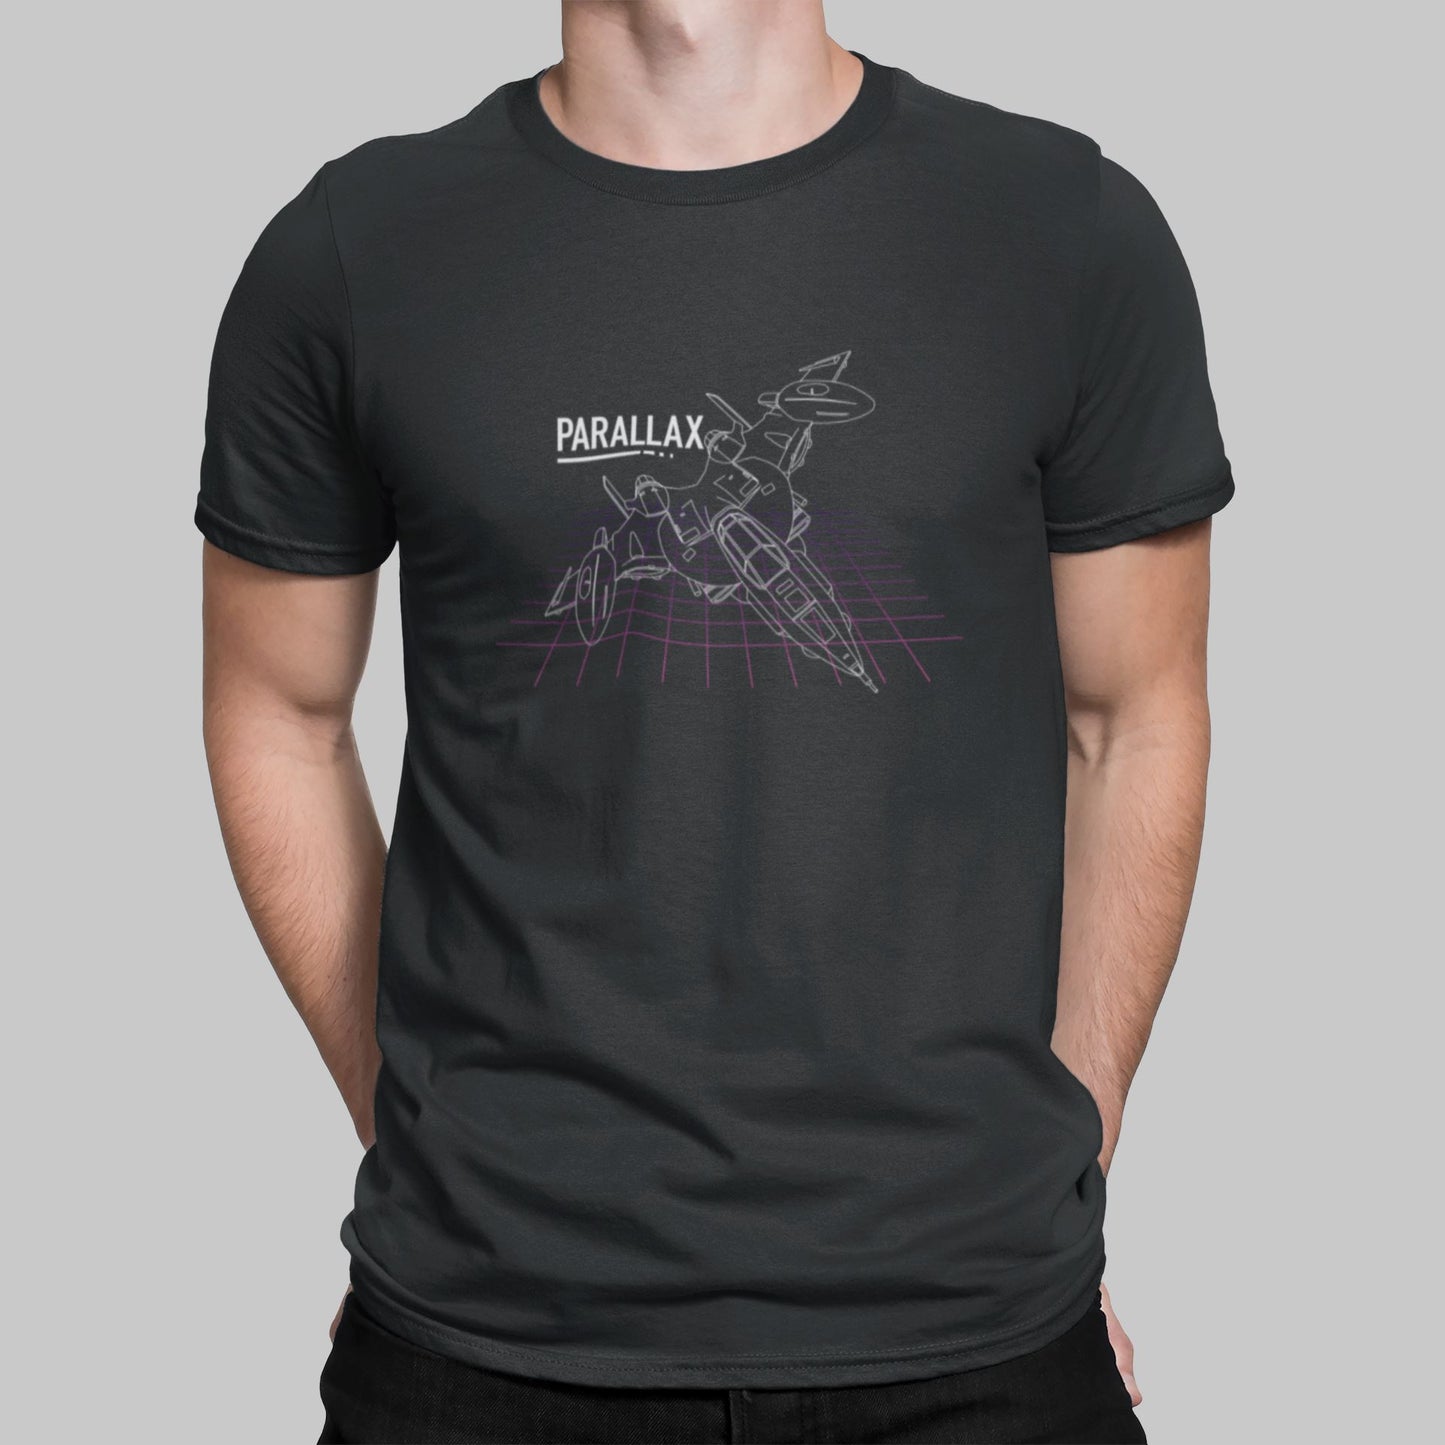 Parallax Retro Gaming T-Shirt T-Shirt Seven Squared Small 34-36" Black 